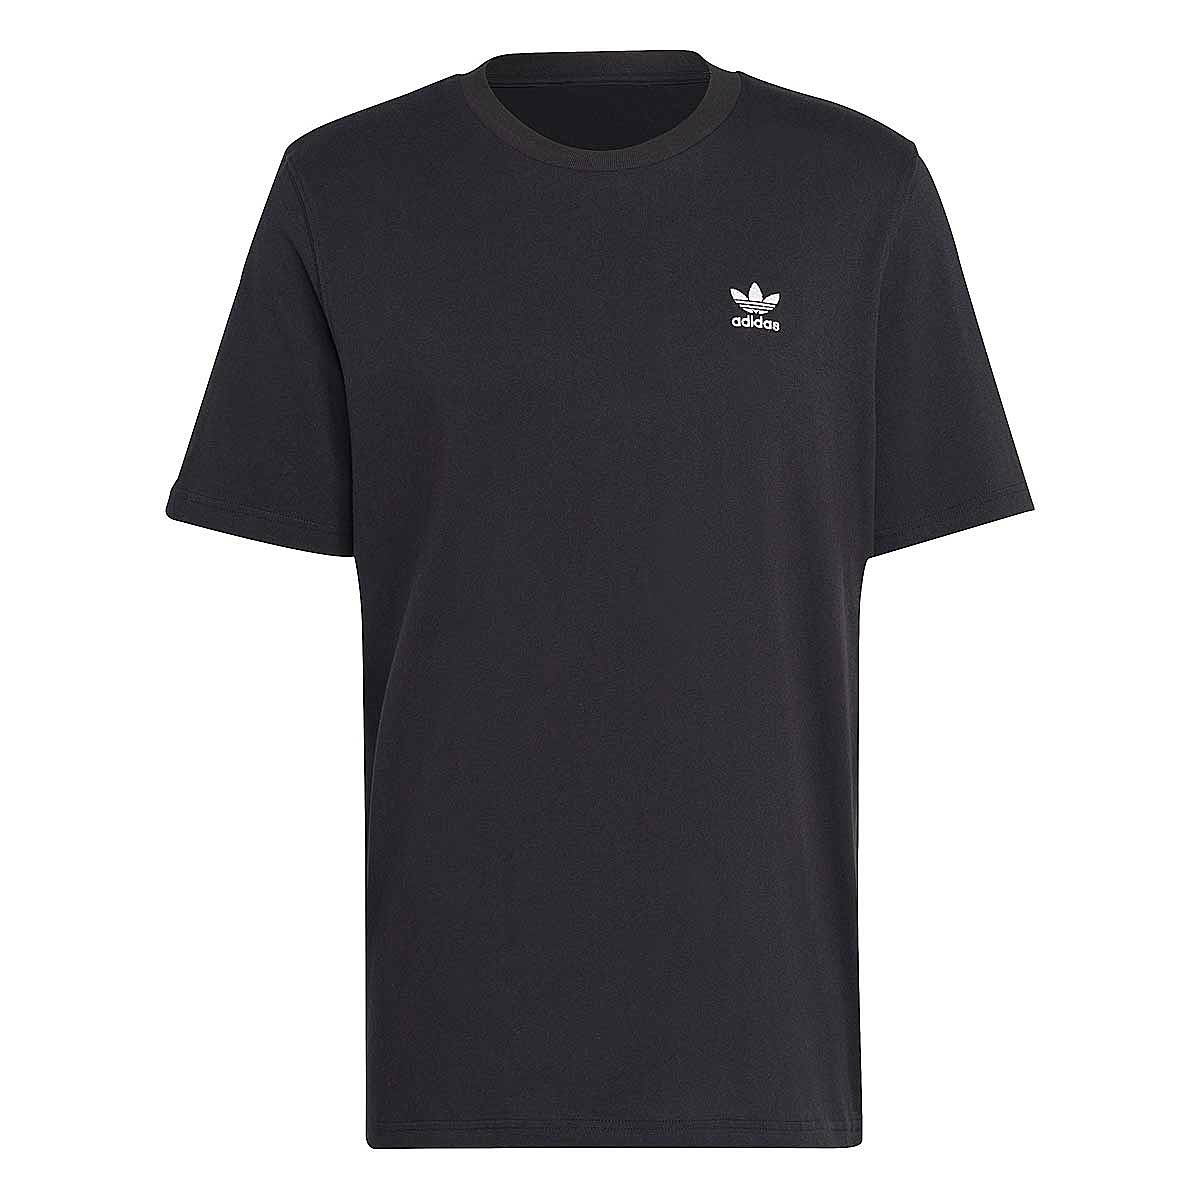 Adidas Essential T-shirt, Schwarz/weiß L